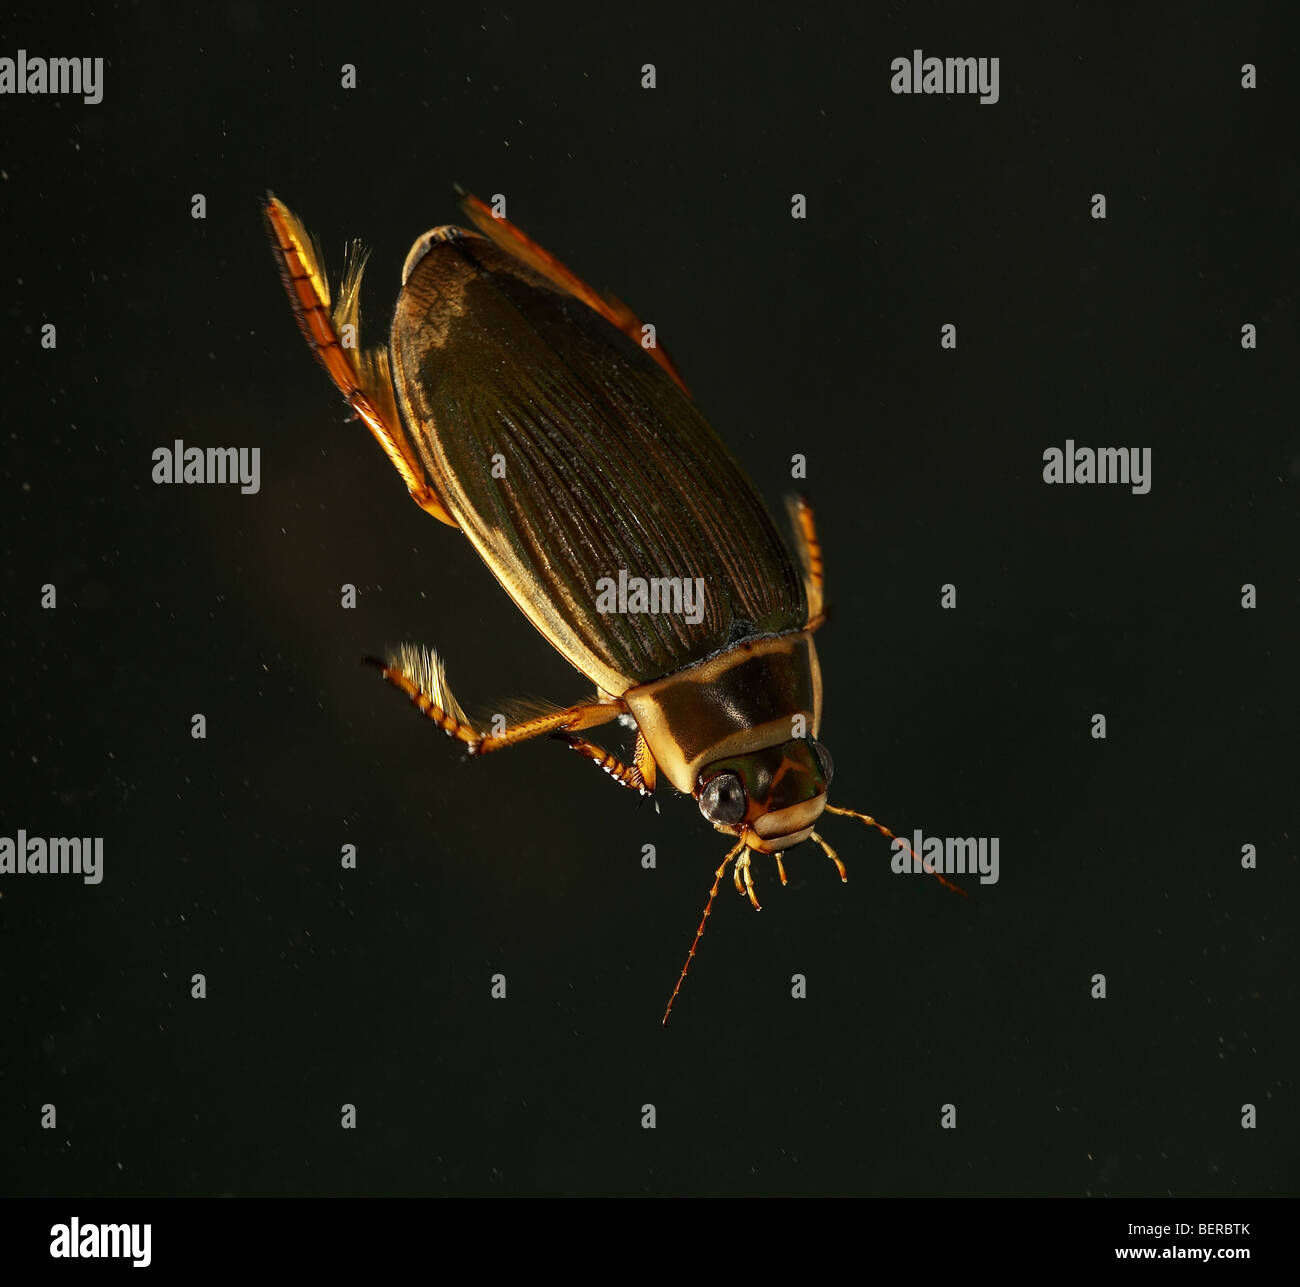 Great diving beetle, Dytiscus marginalis swimming under water Stock Photo